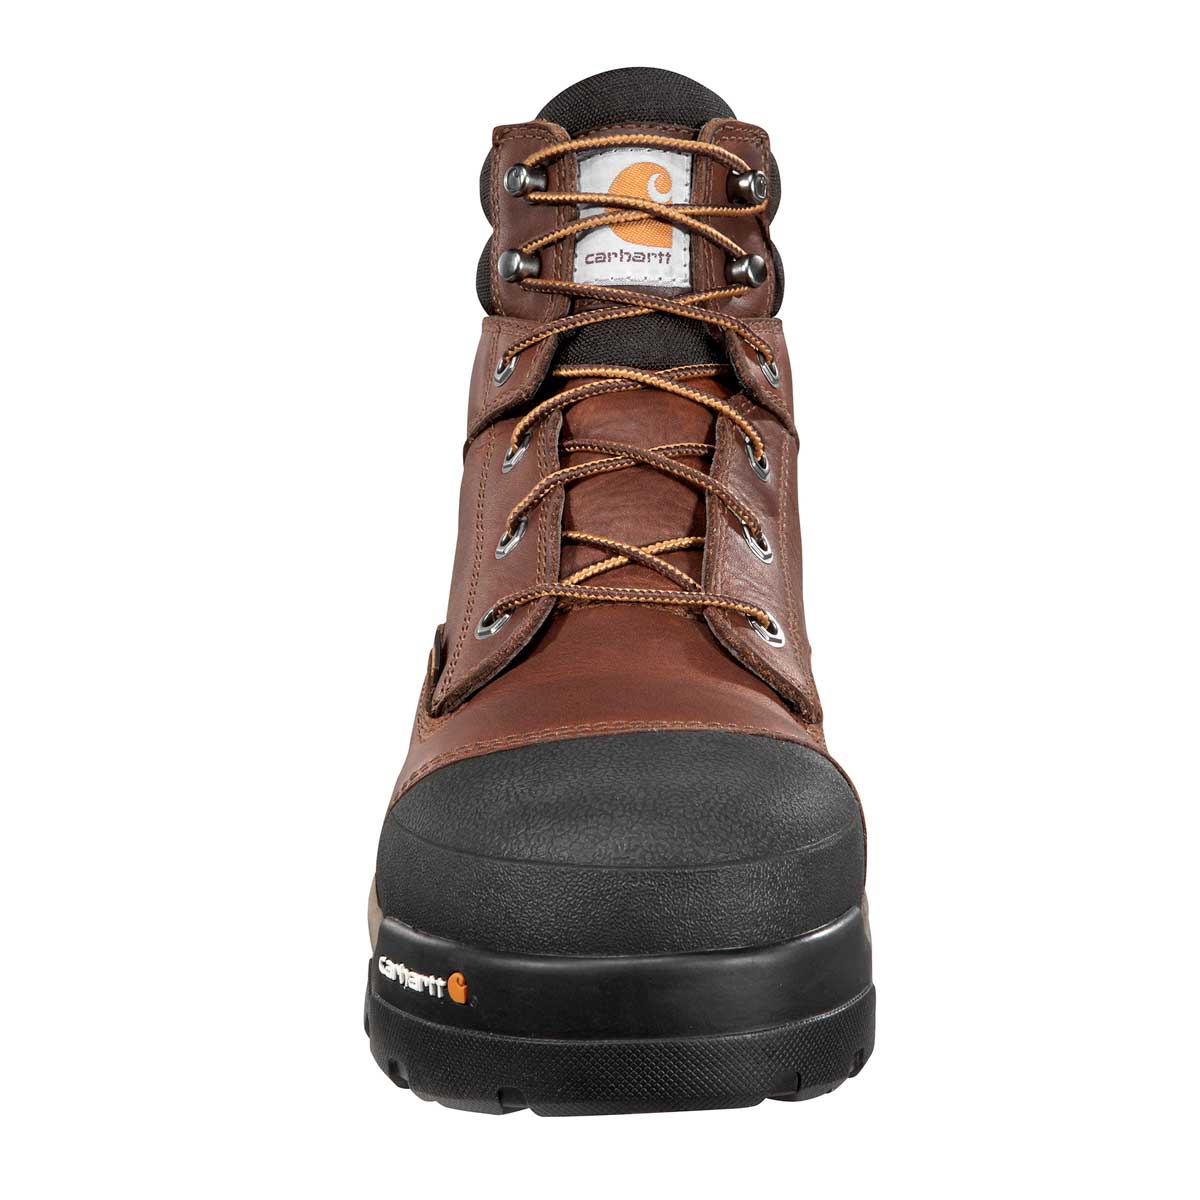 Carhartt Men's Ground Force 6" Composite Toe Work Boots - Brown